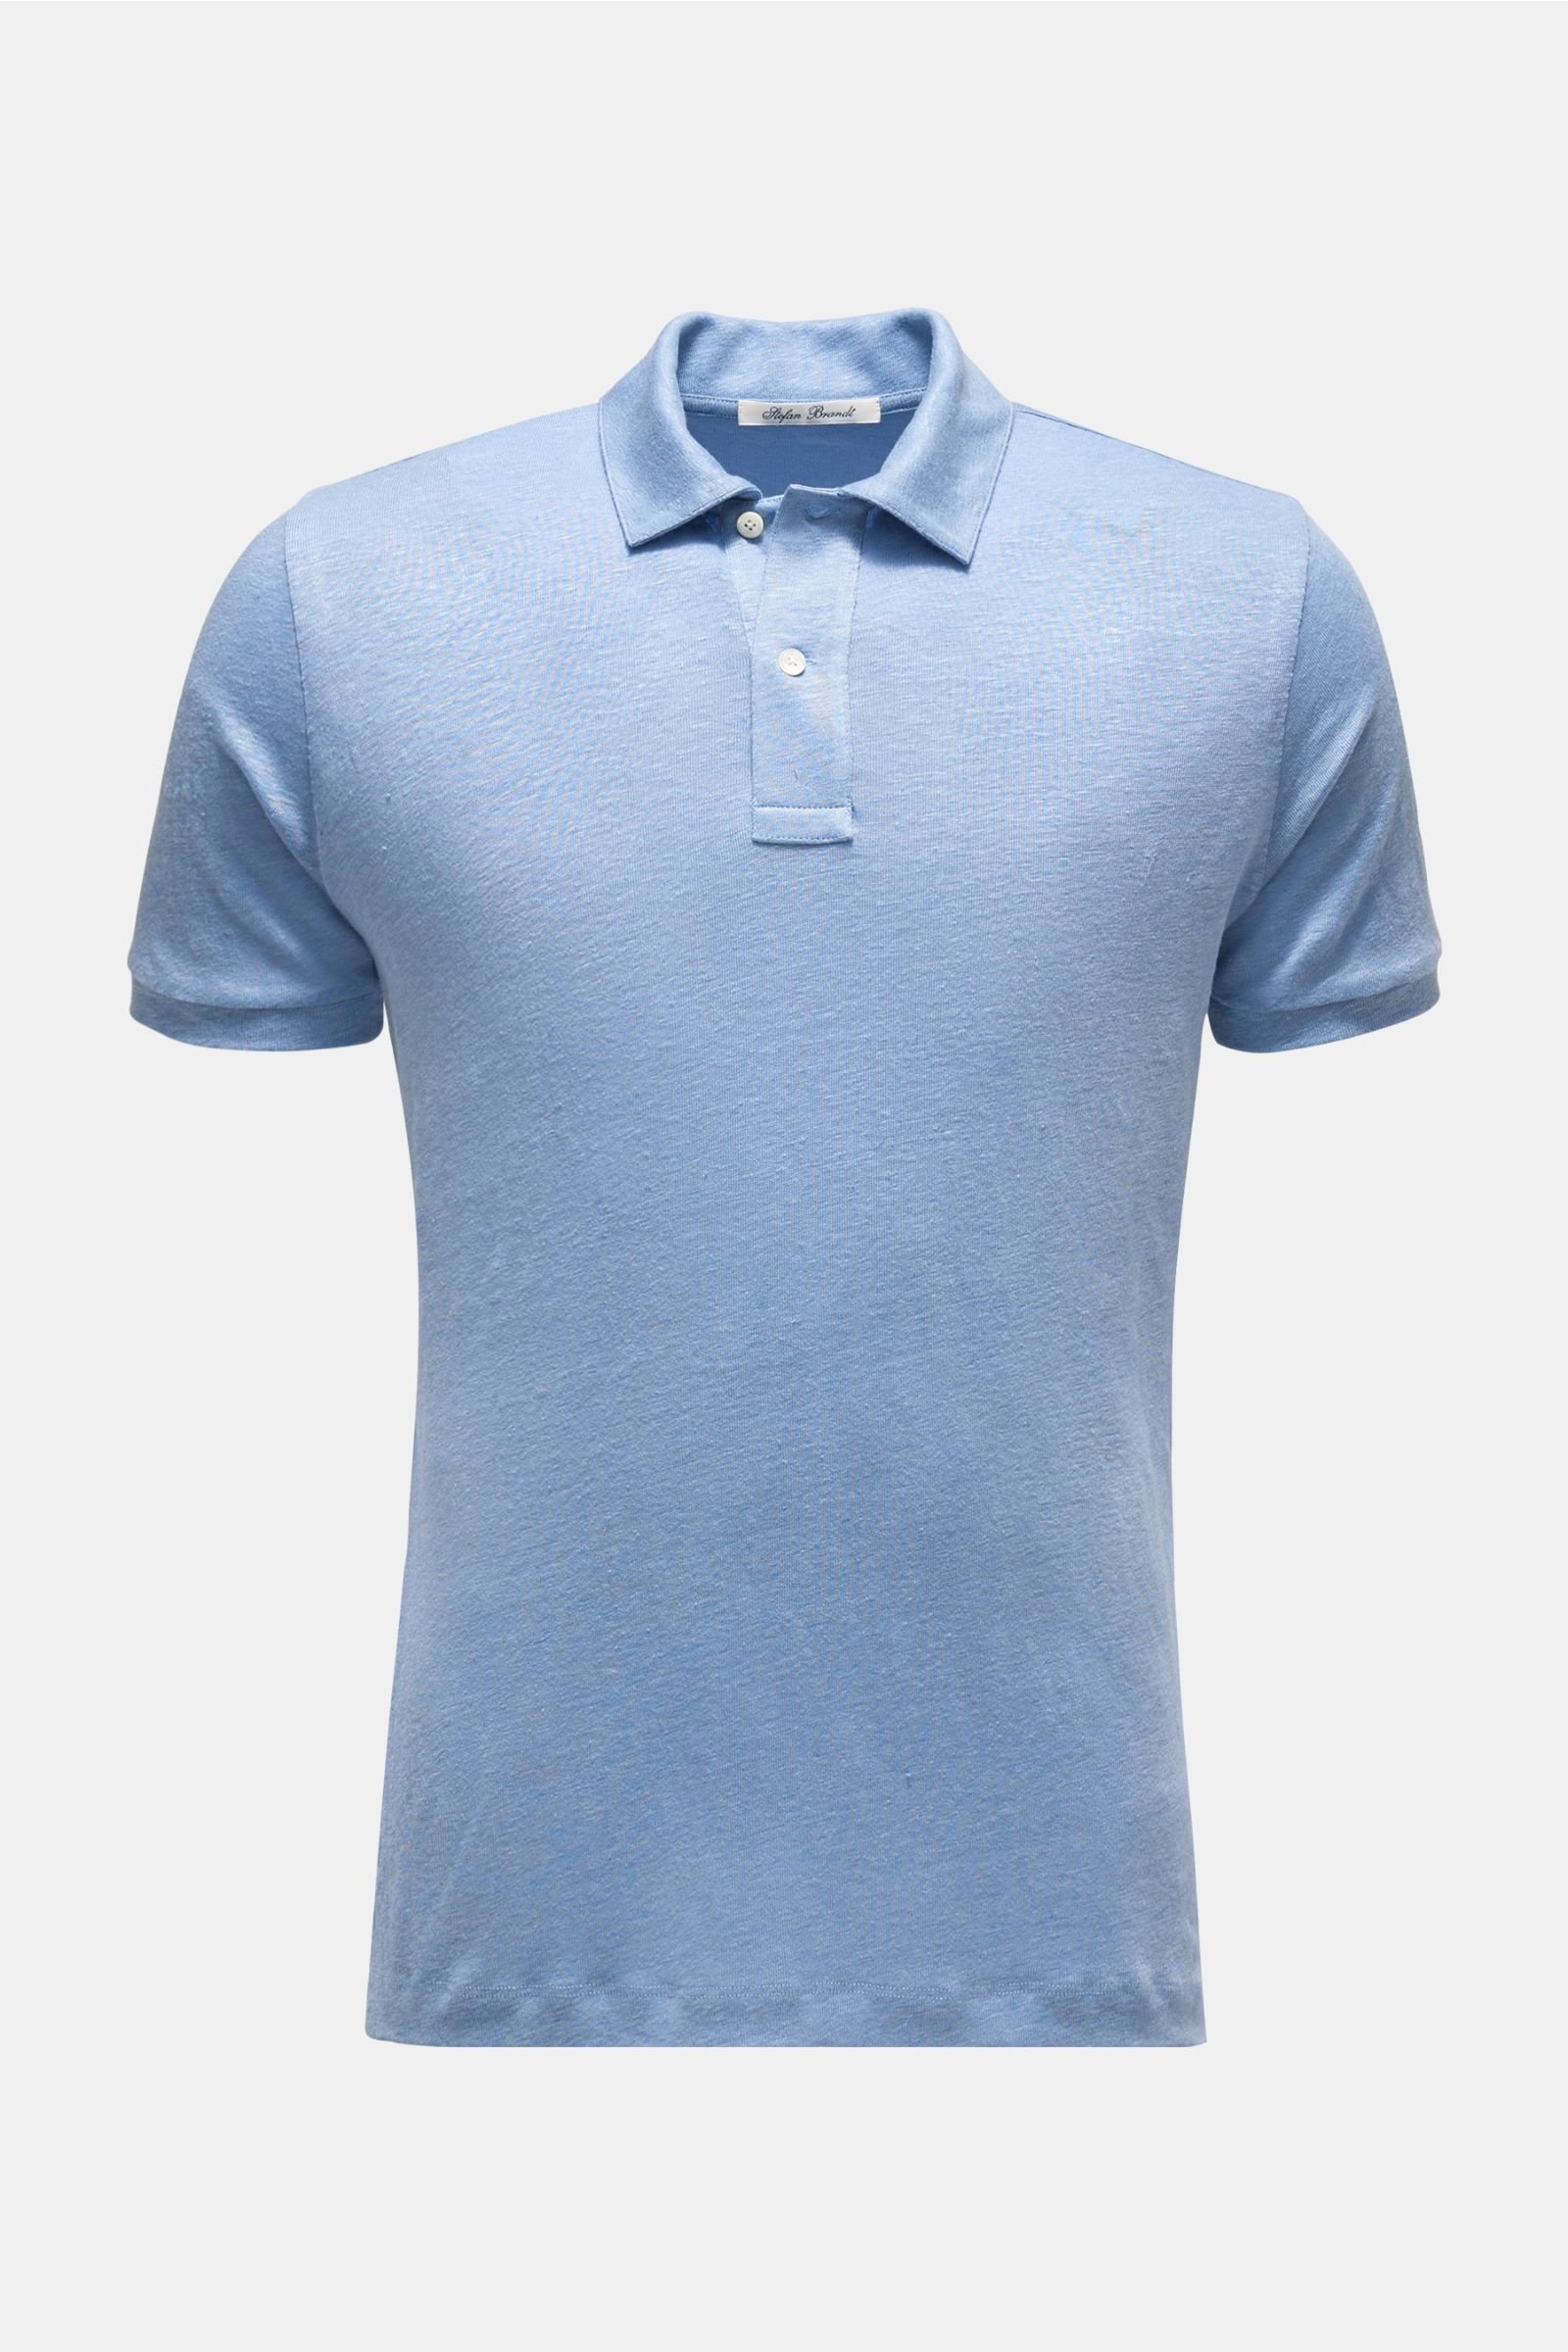 Linen short sleeve knit polo 'Leandro' smoky blue